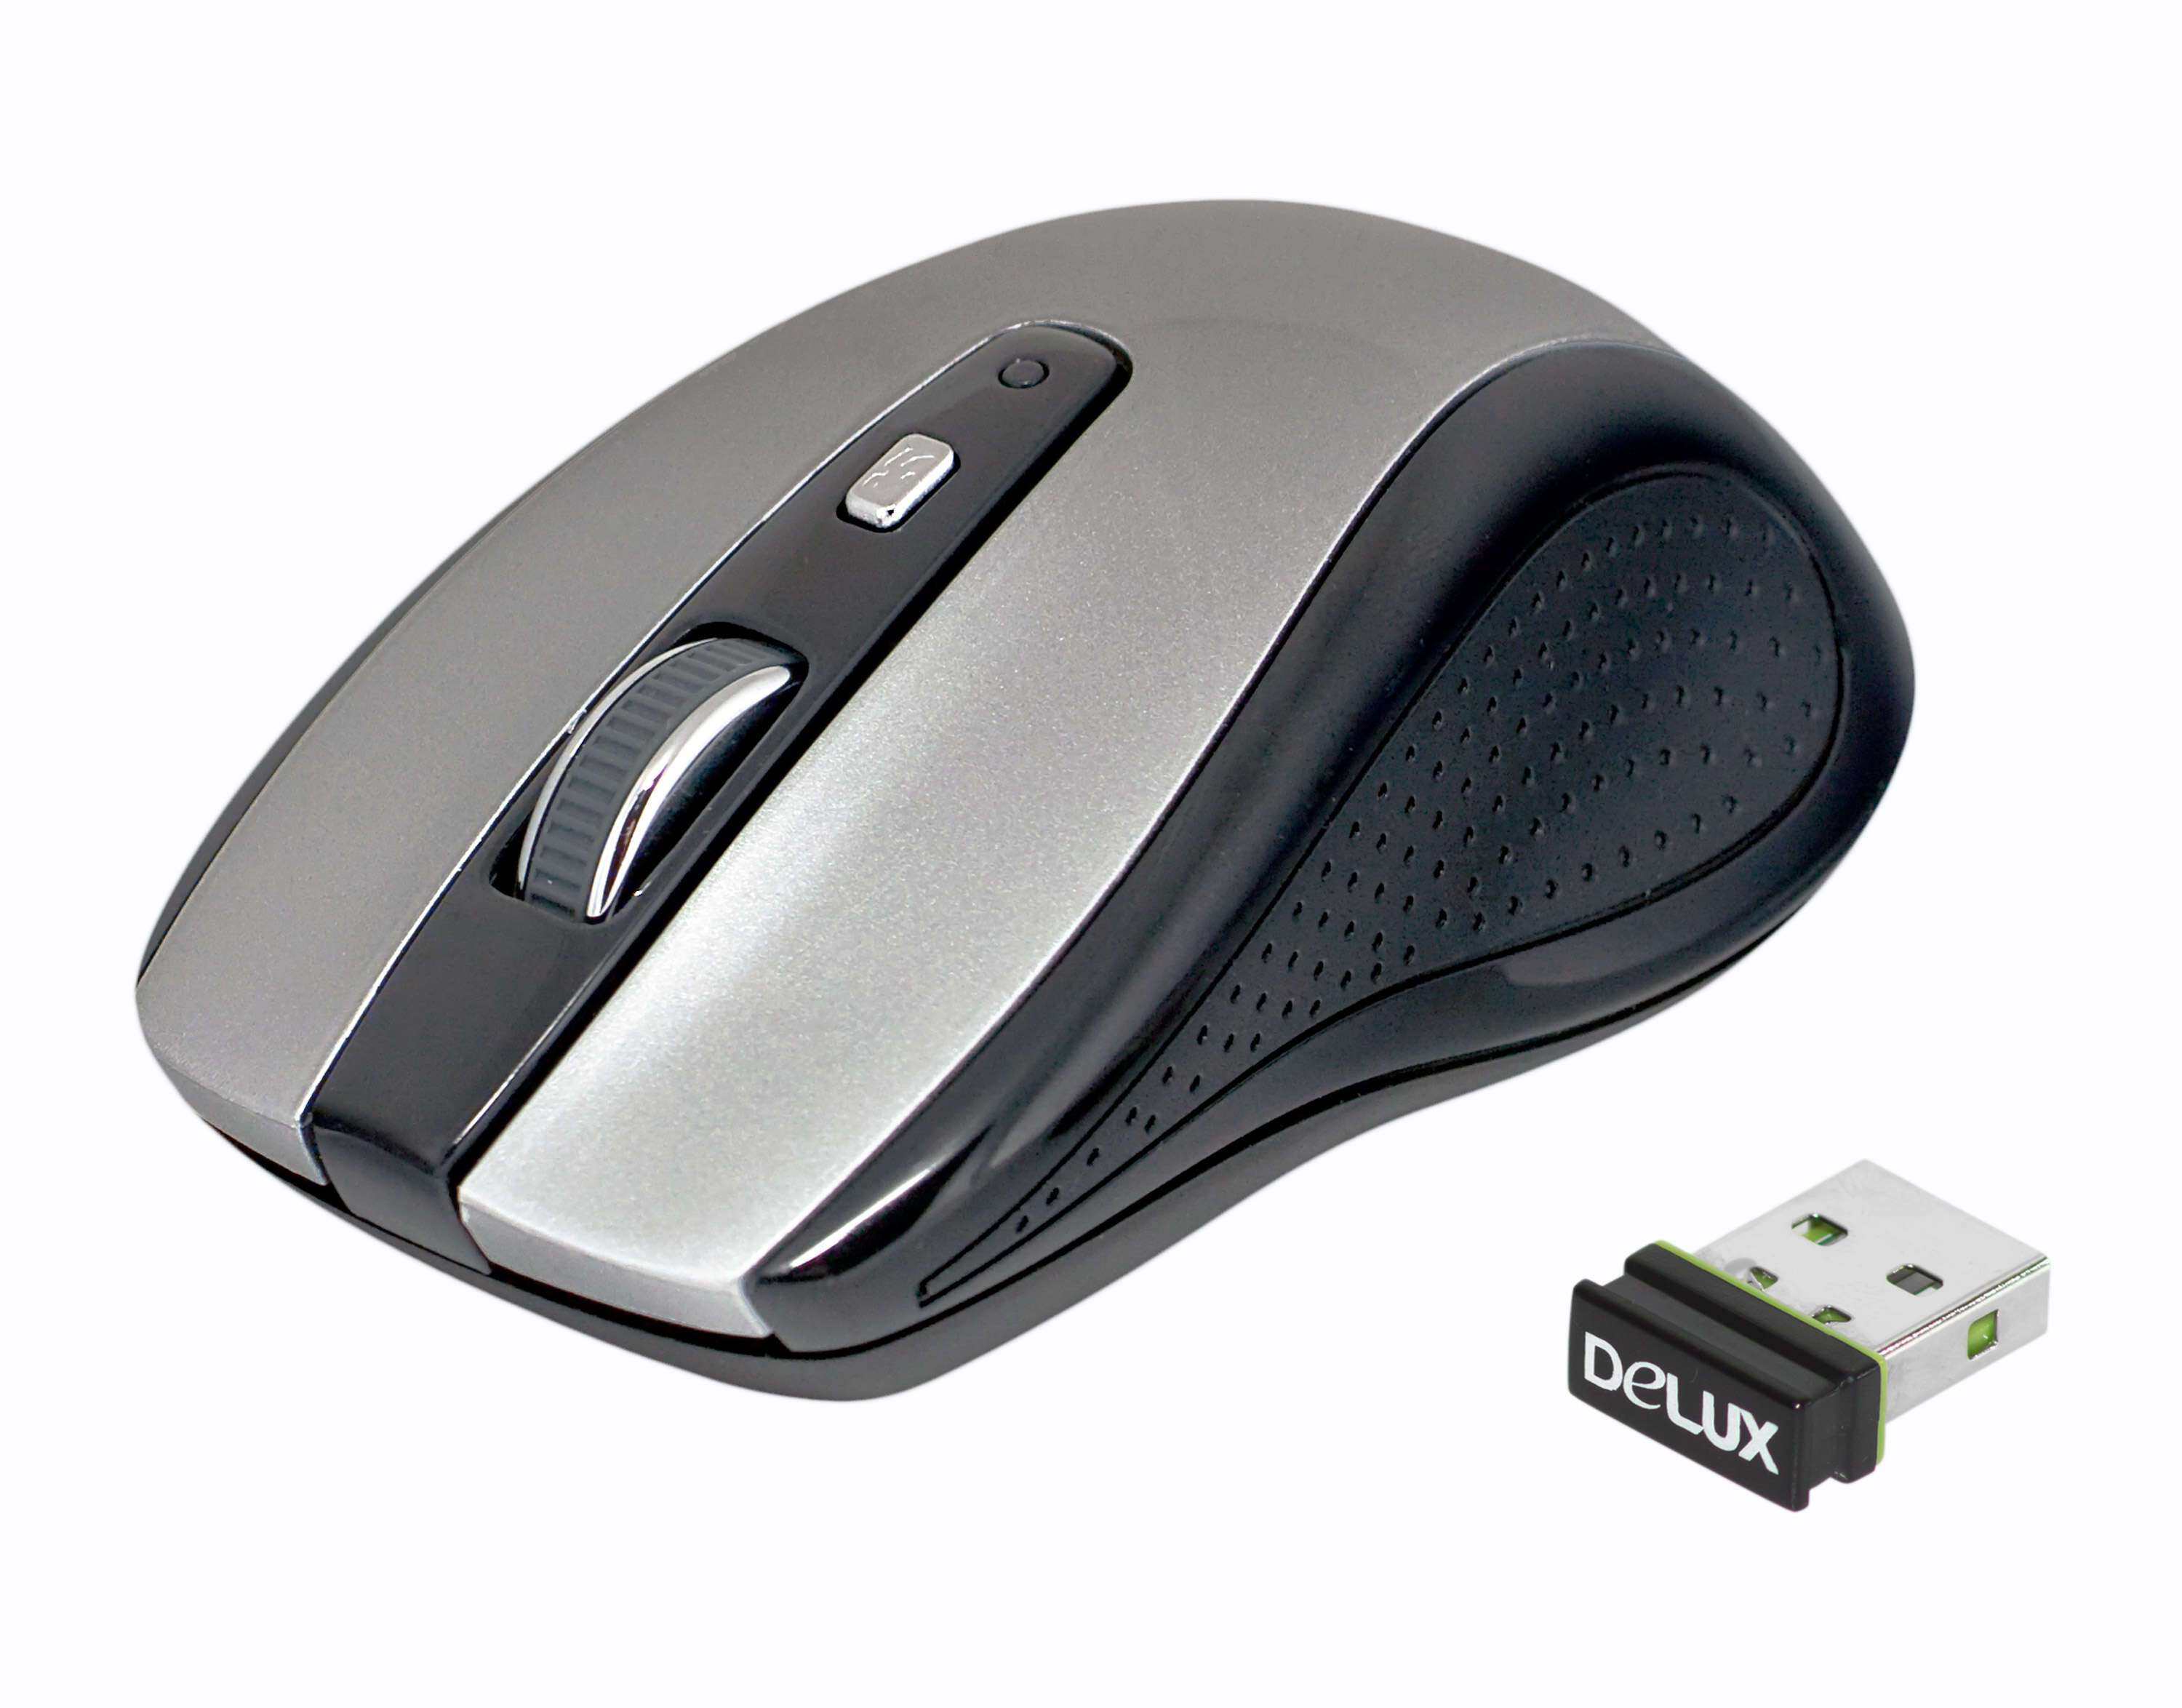 Какая беспроводная мышь лучше. Мышь Delux dlm-486gl Silver-Black USB. Mouse Delux m105gx-g07uf Wireless. Mouse Delux m107gx+g07uf Wireless. Мышь Samsung MLC-610b Wireless Laser Mouse Black-Silver USB.